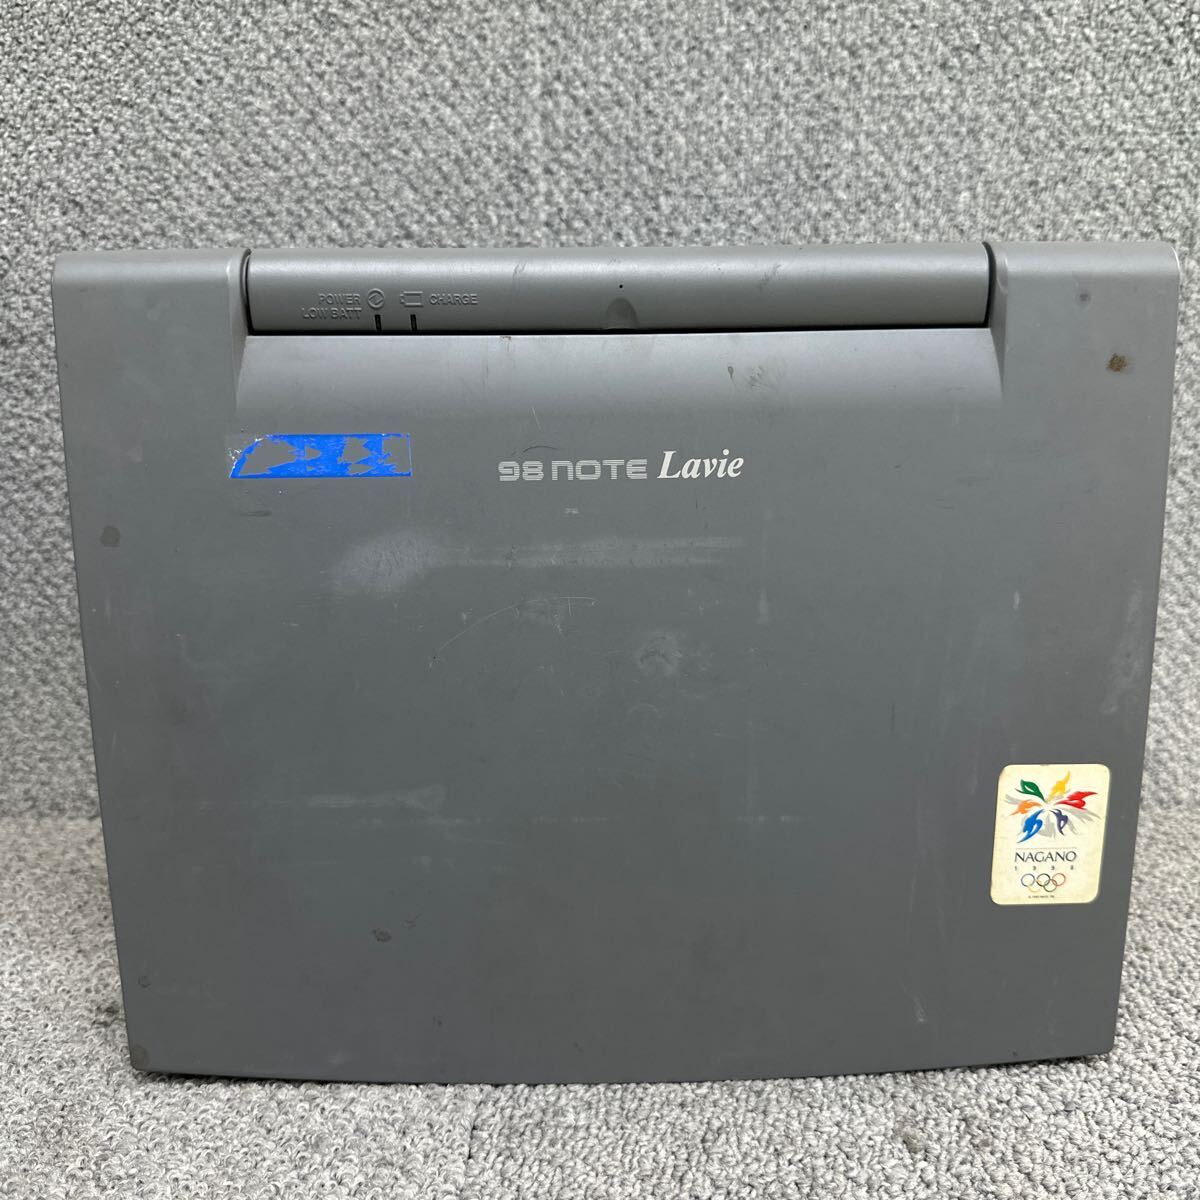 PCN98-1804 激安 PC98 ノートブック NEC 98note Lavie PC-9821Na12/S8 起動確認済み ジャンク 同梱可能_画像6